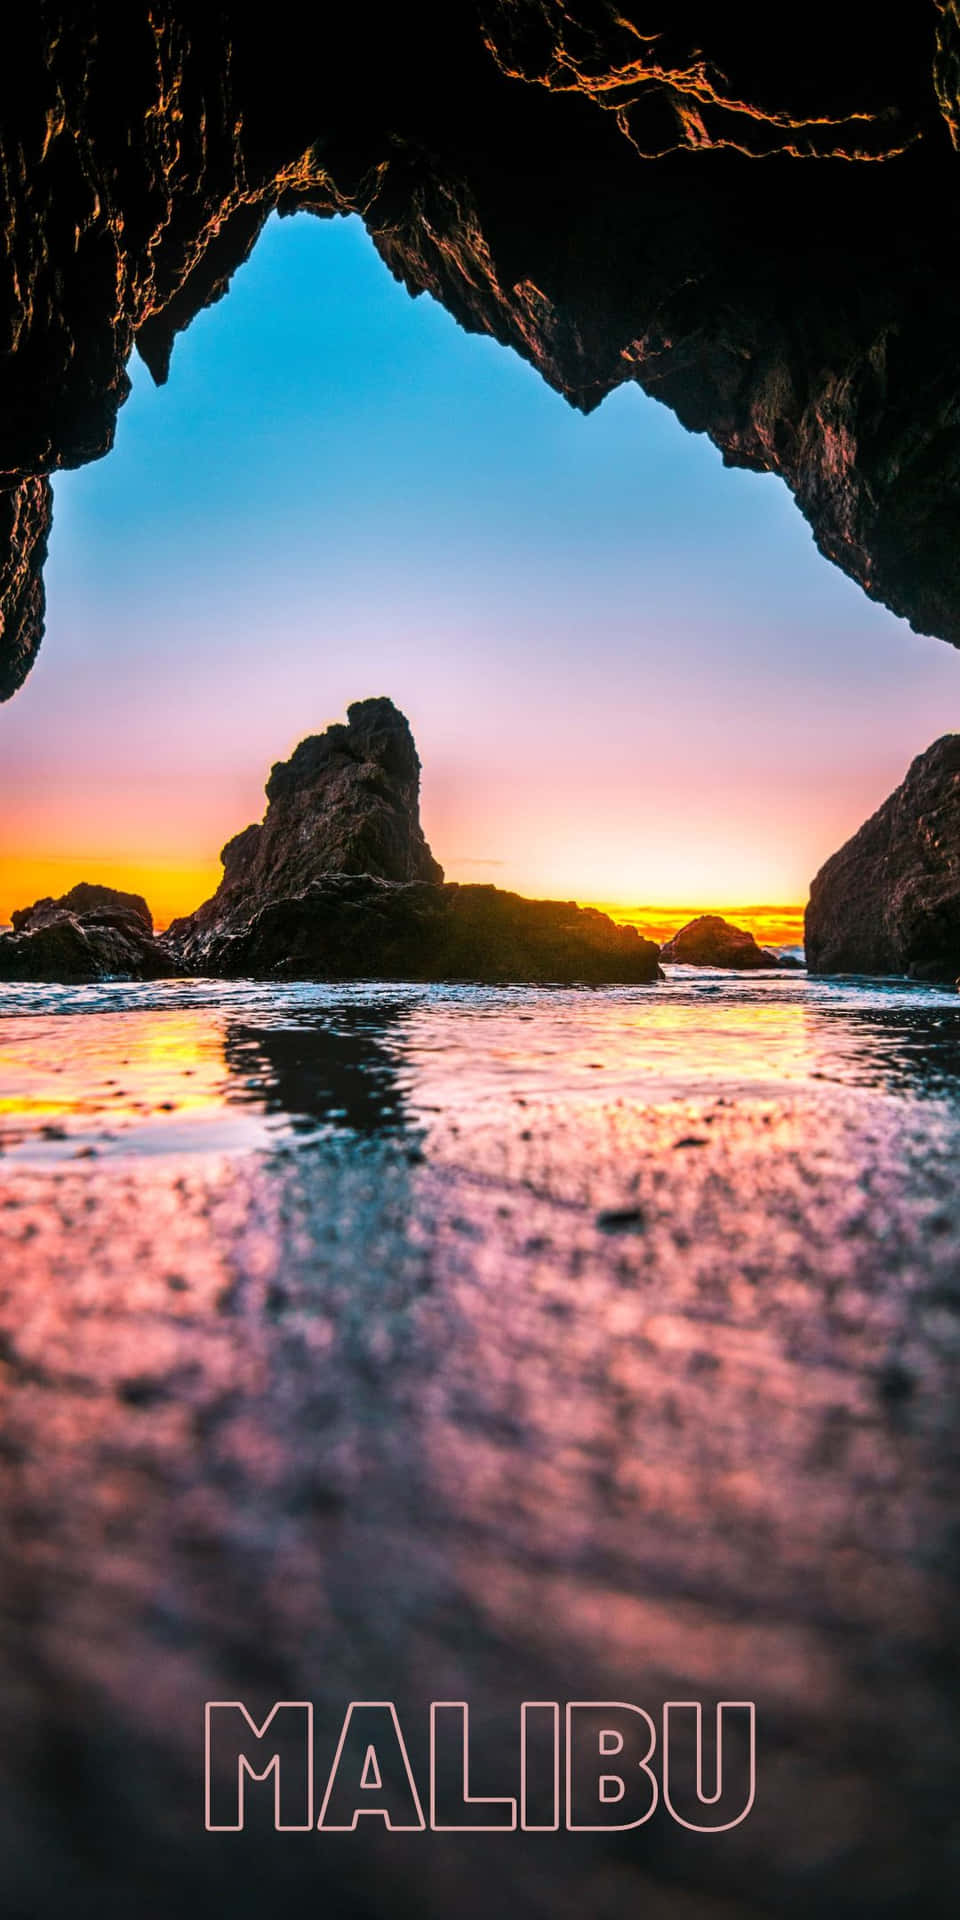 Cave During Sunset Pixel 3 Malibu Background